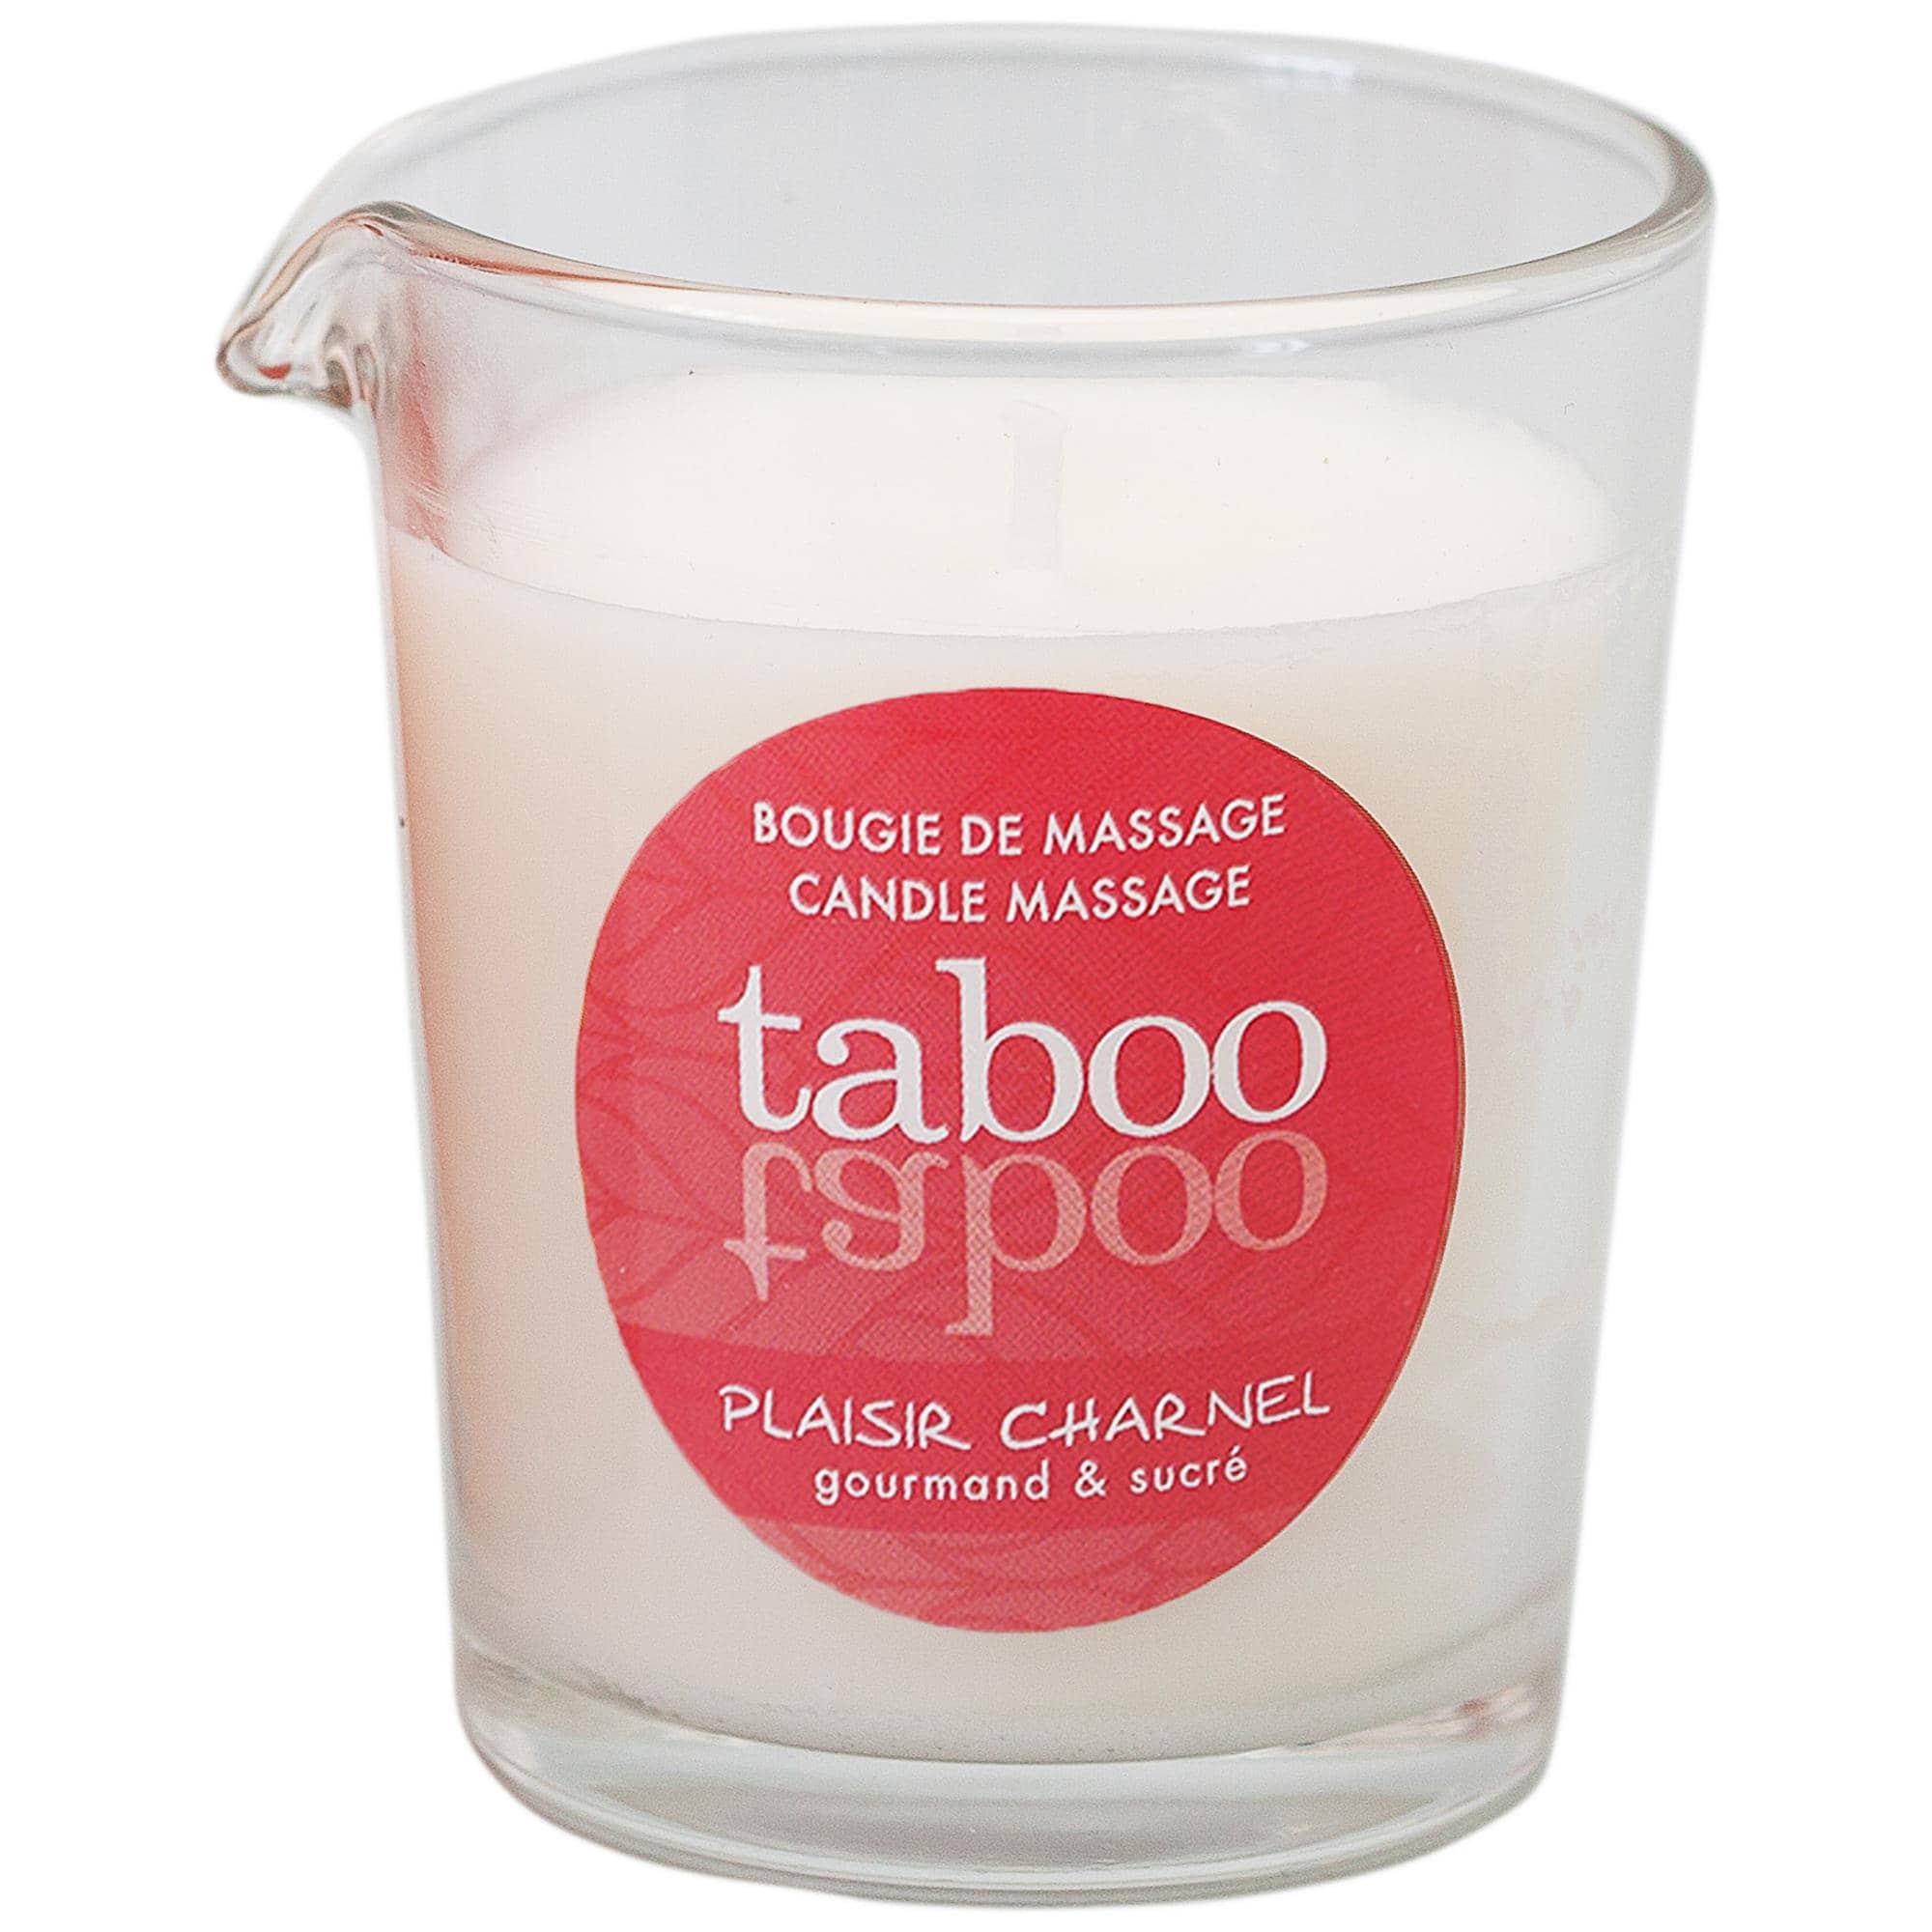 Taboo Plaisir Charnel Massage Candle